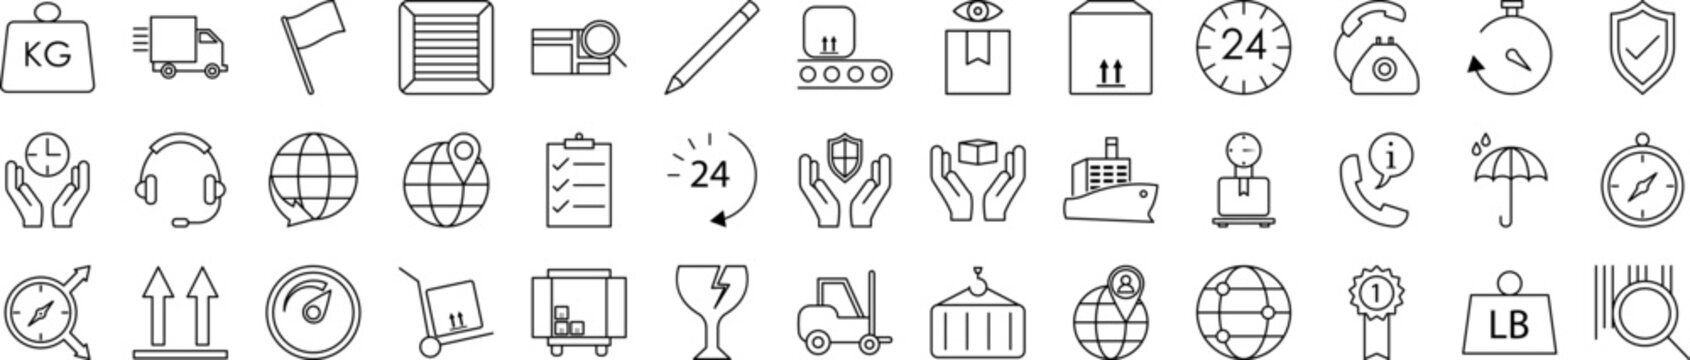 Logistics icons collection vector illustration design